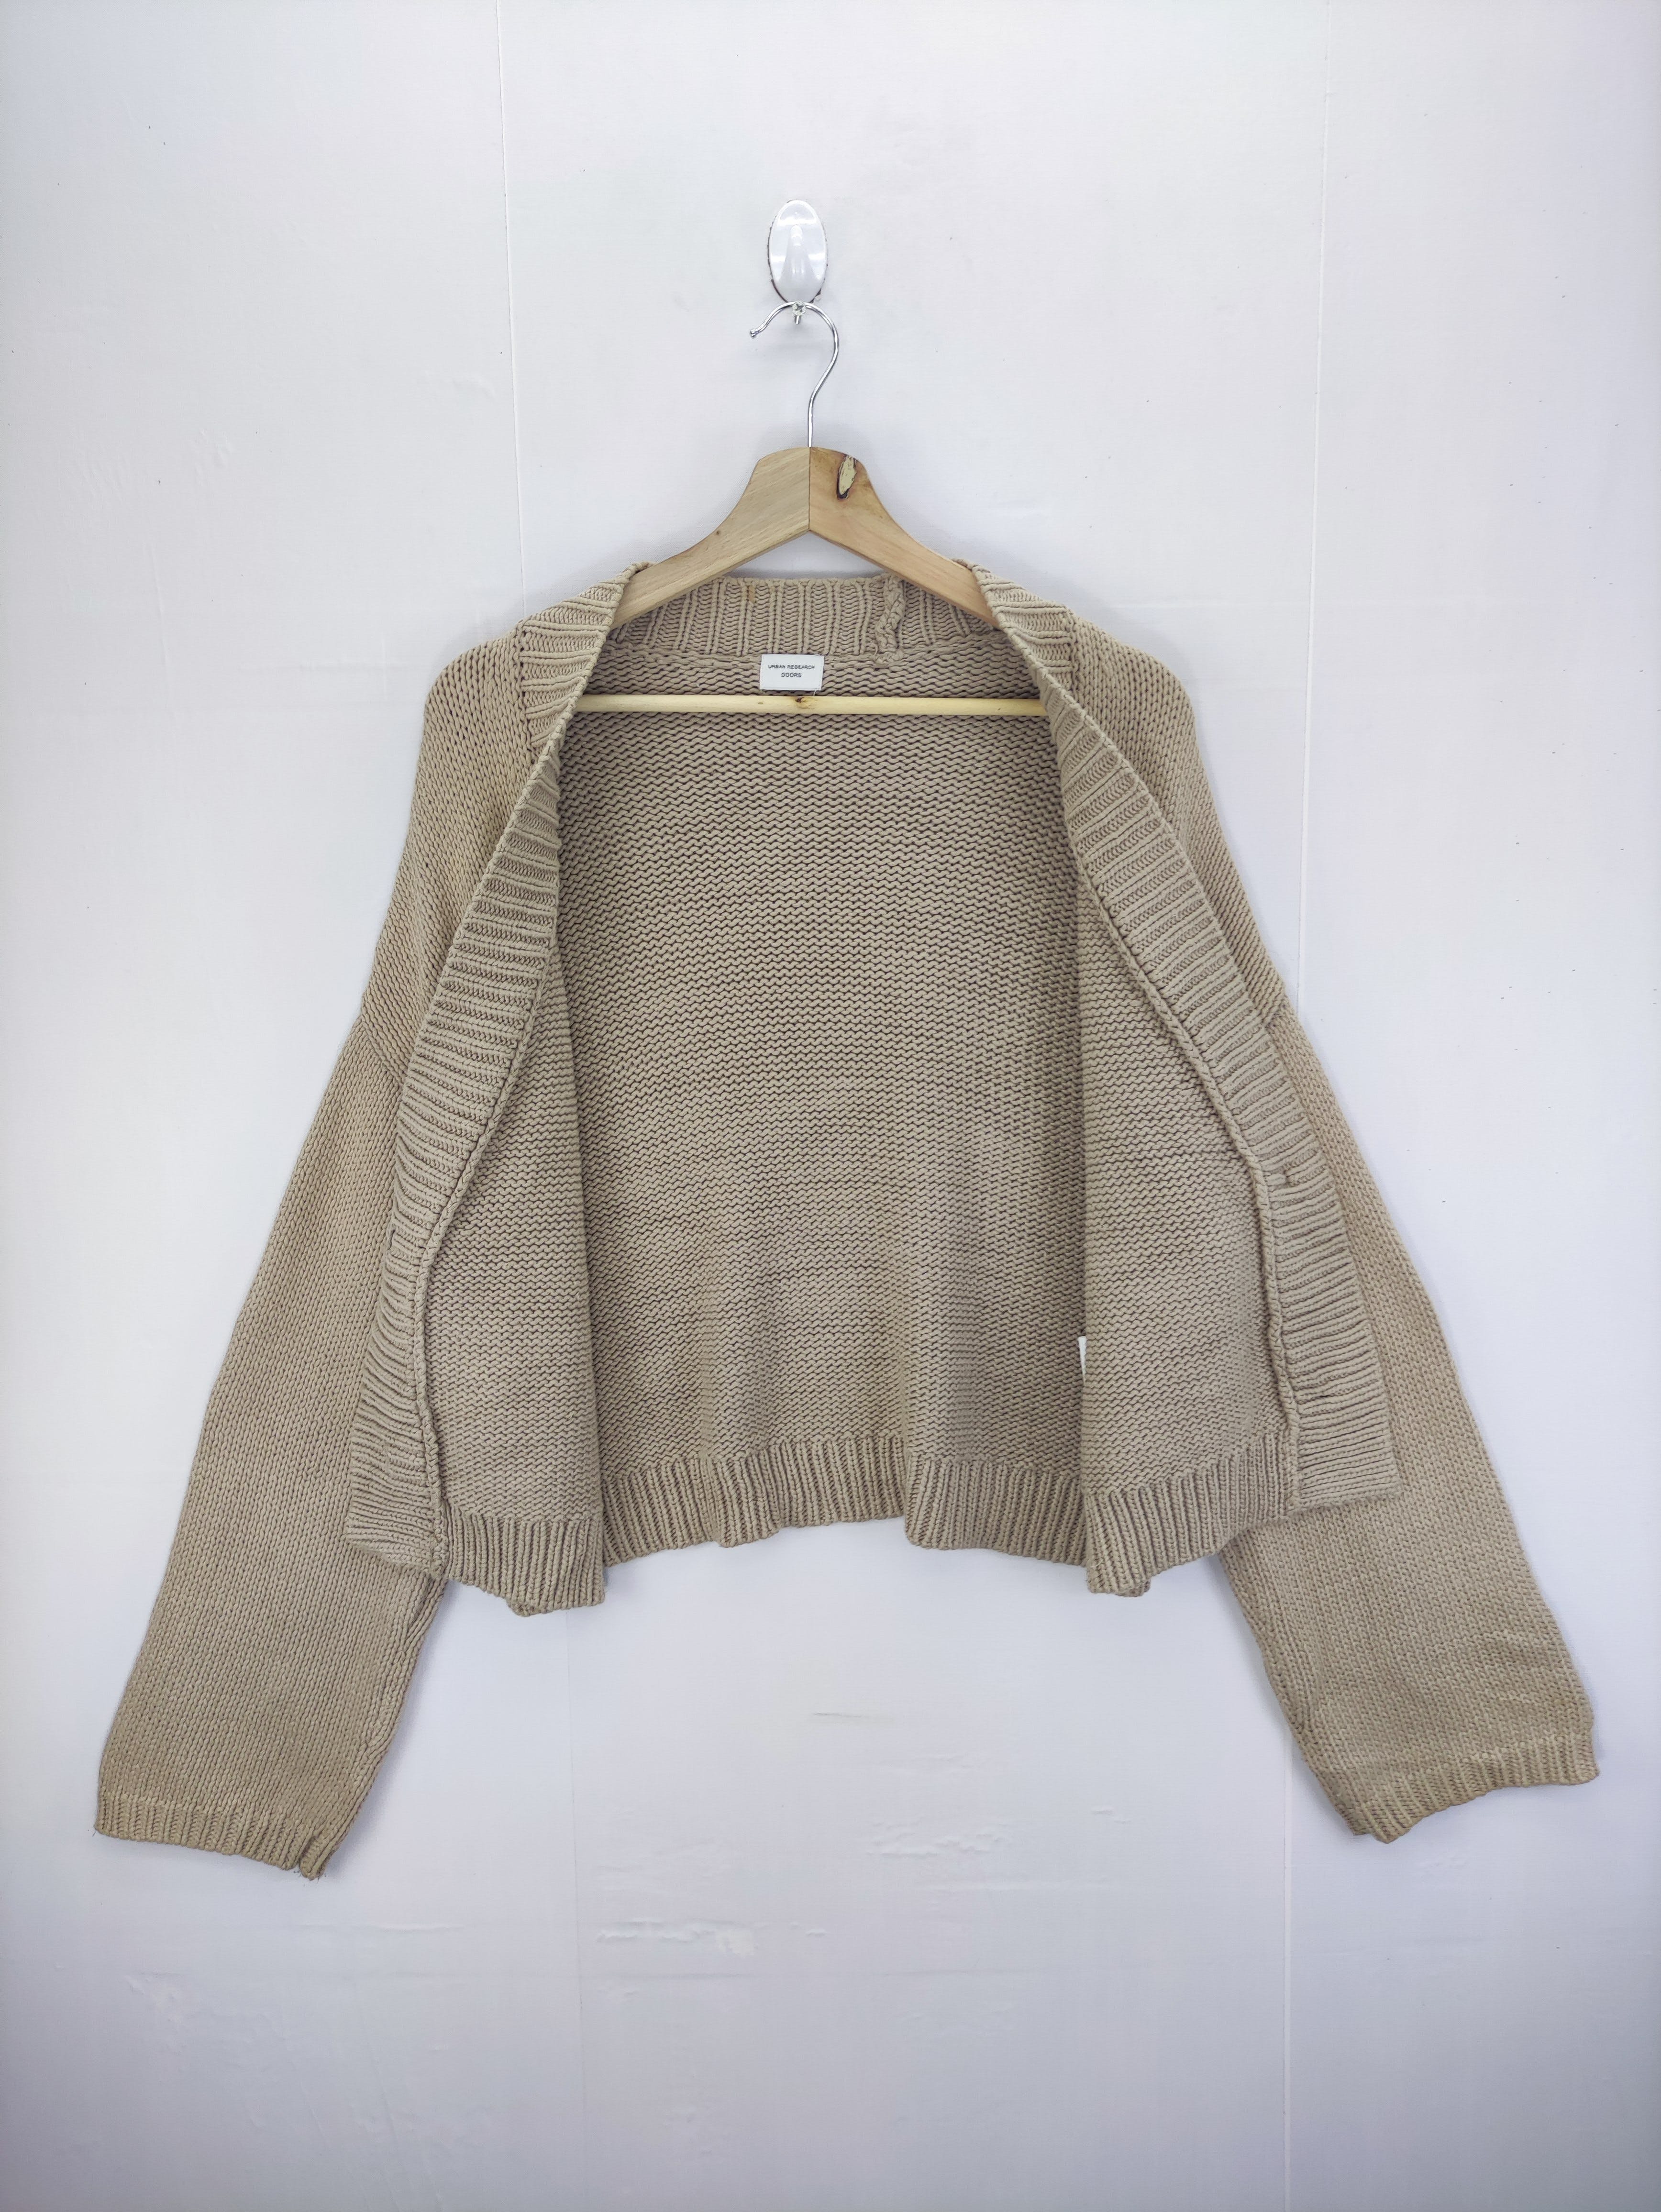 Urban Research Doors - Vintage Urban Research Cardigan Knit Sweater - 3